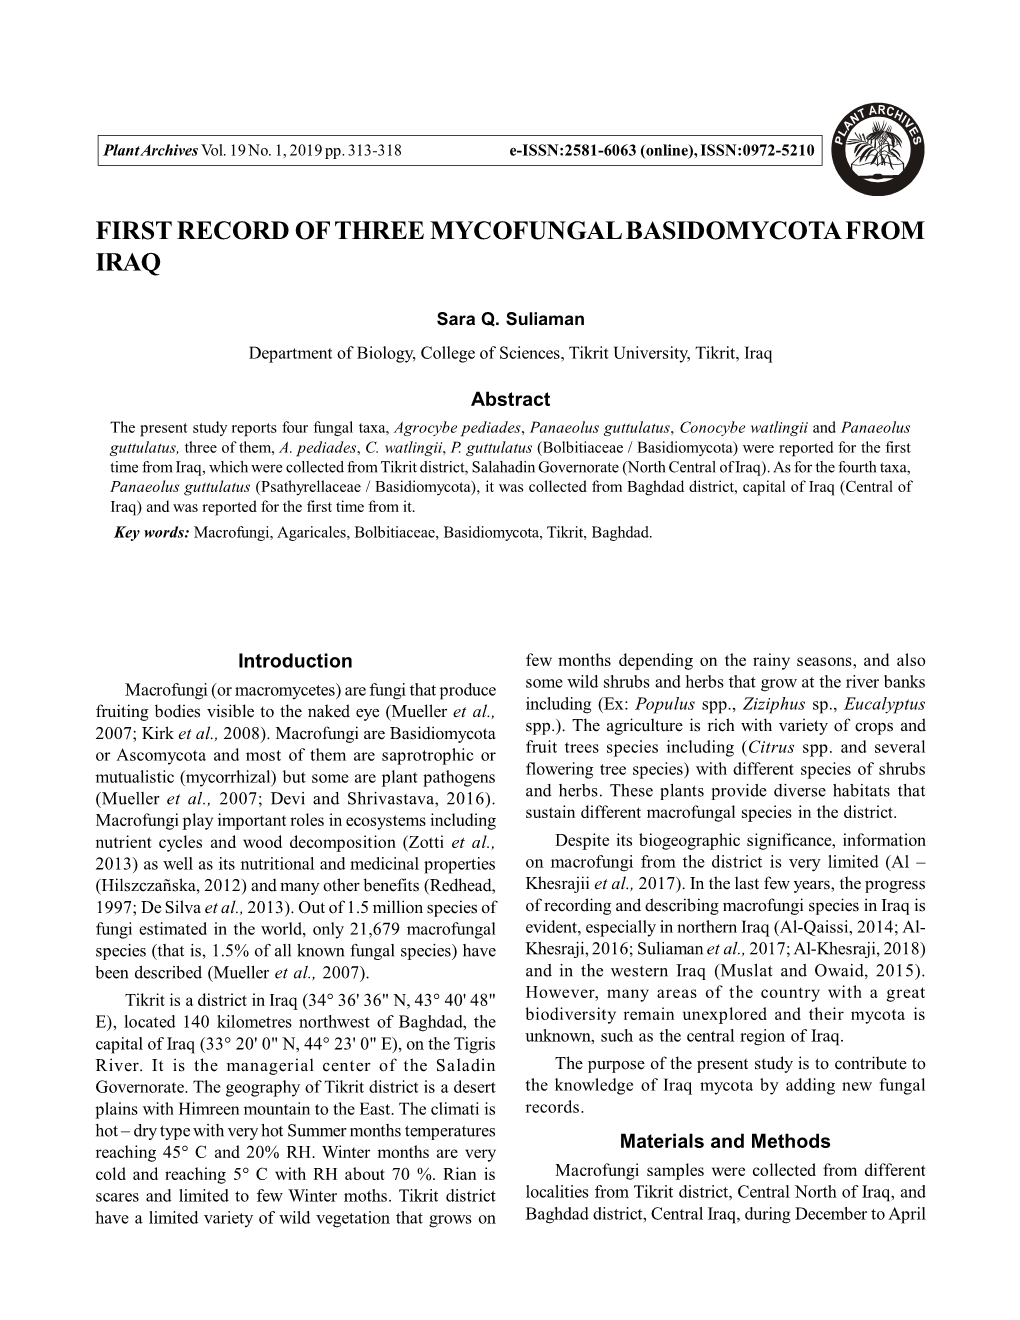 First Record of Three Mycofungal Basidomycota from Iraq